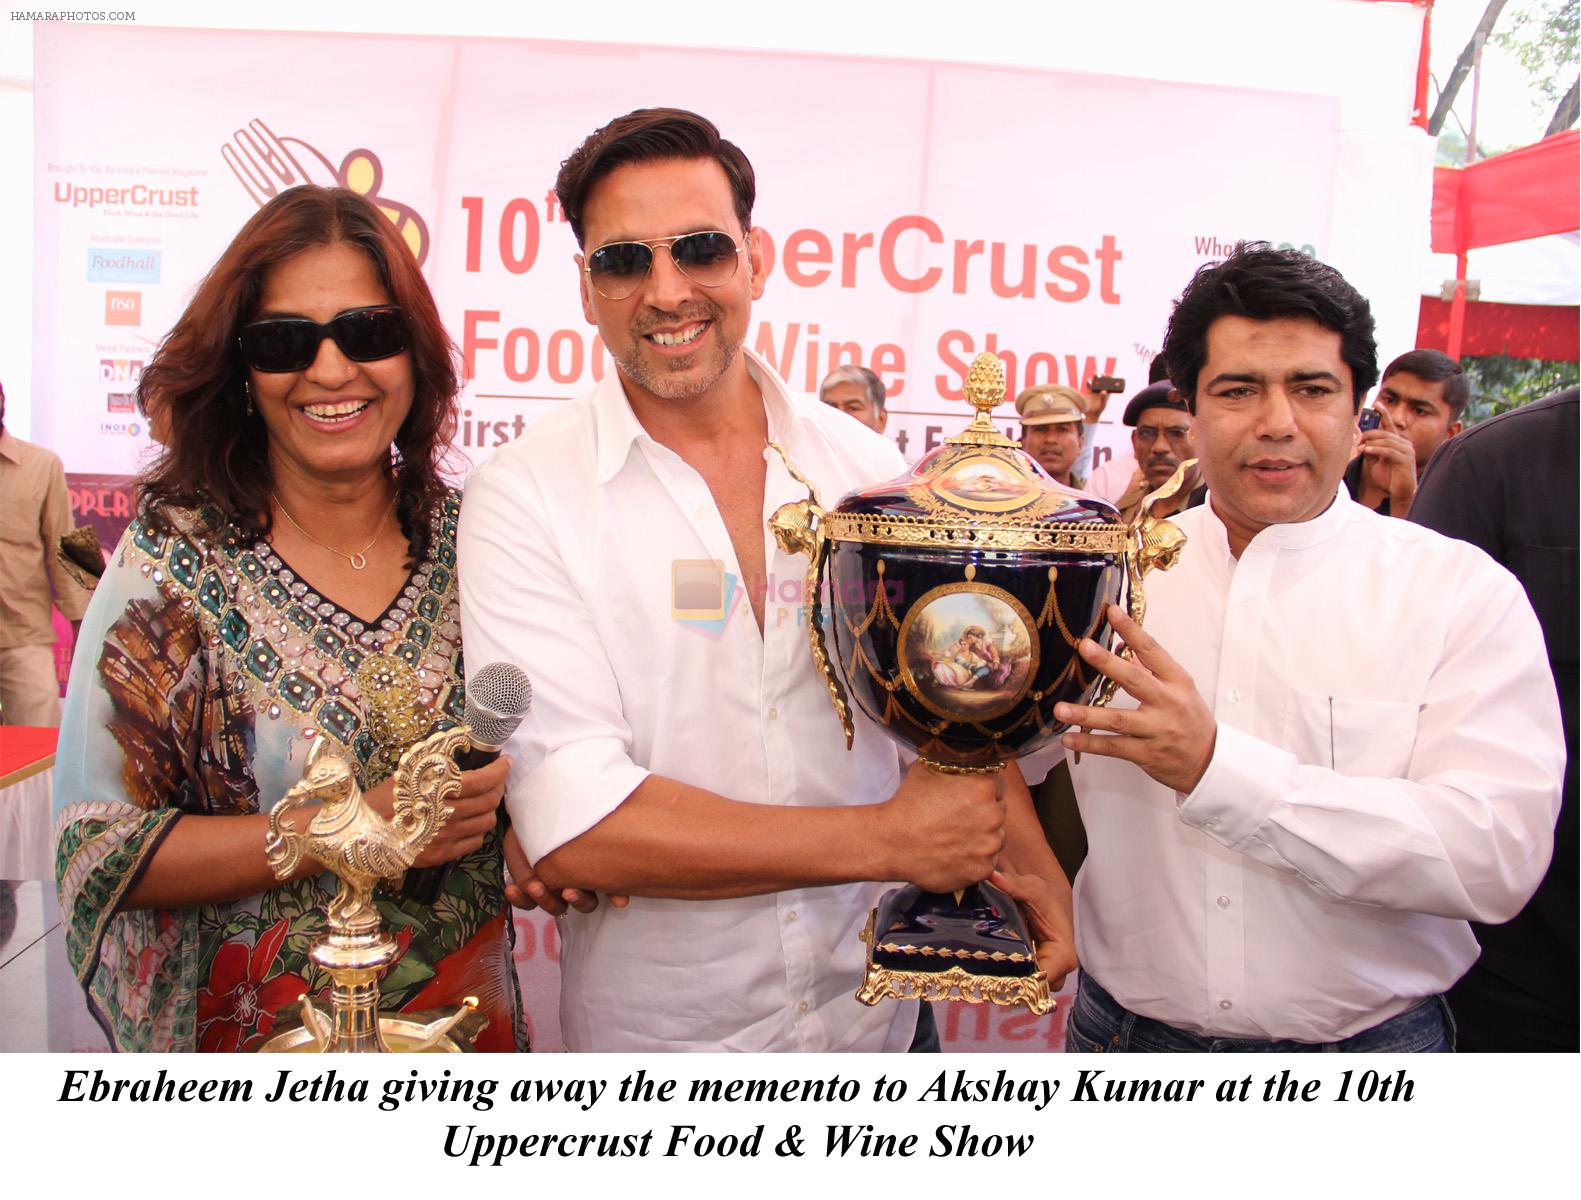 Ebraheem Jetha giving away the memento to Akshay Kumar at the 10th Uppercrust Food & Wine Show 2